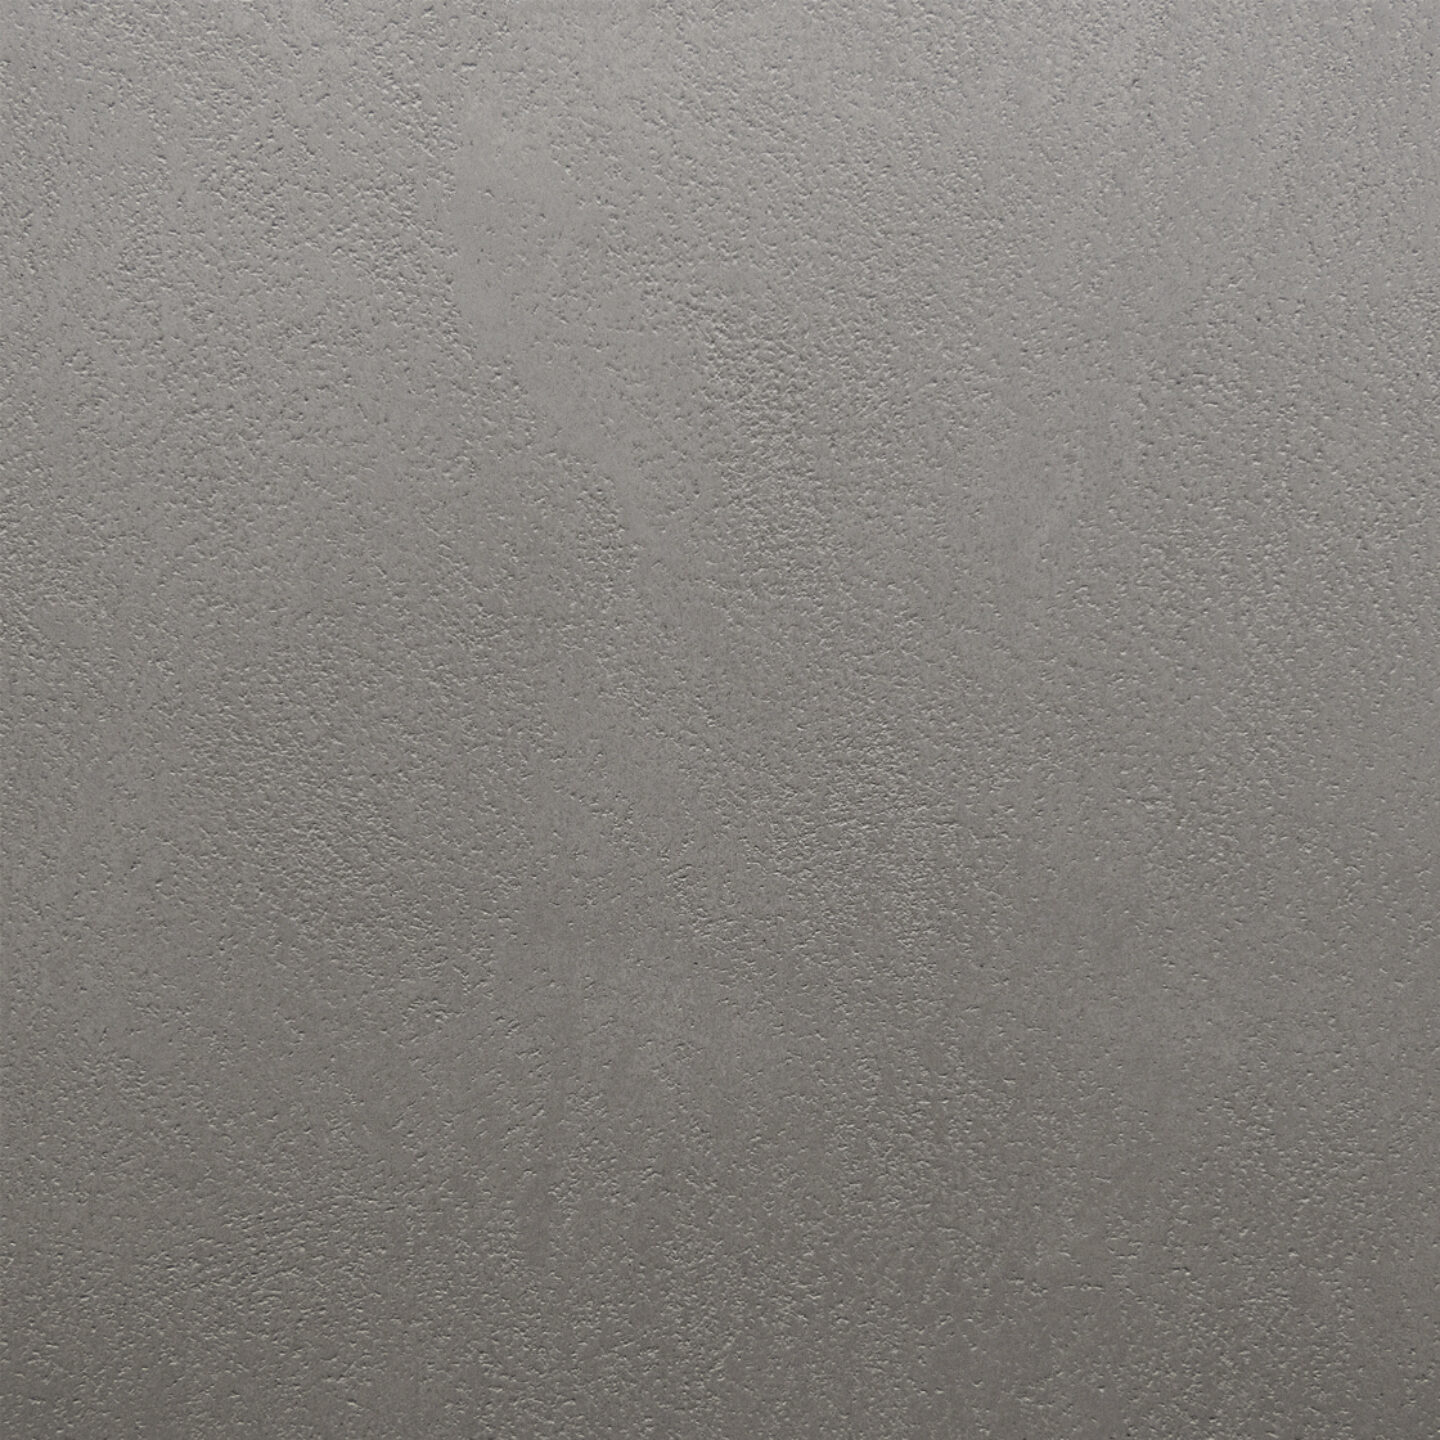 Close up of Armourcoat leatherstone exterior polished plaster finish - 40